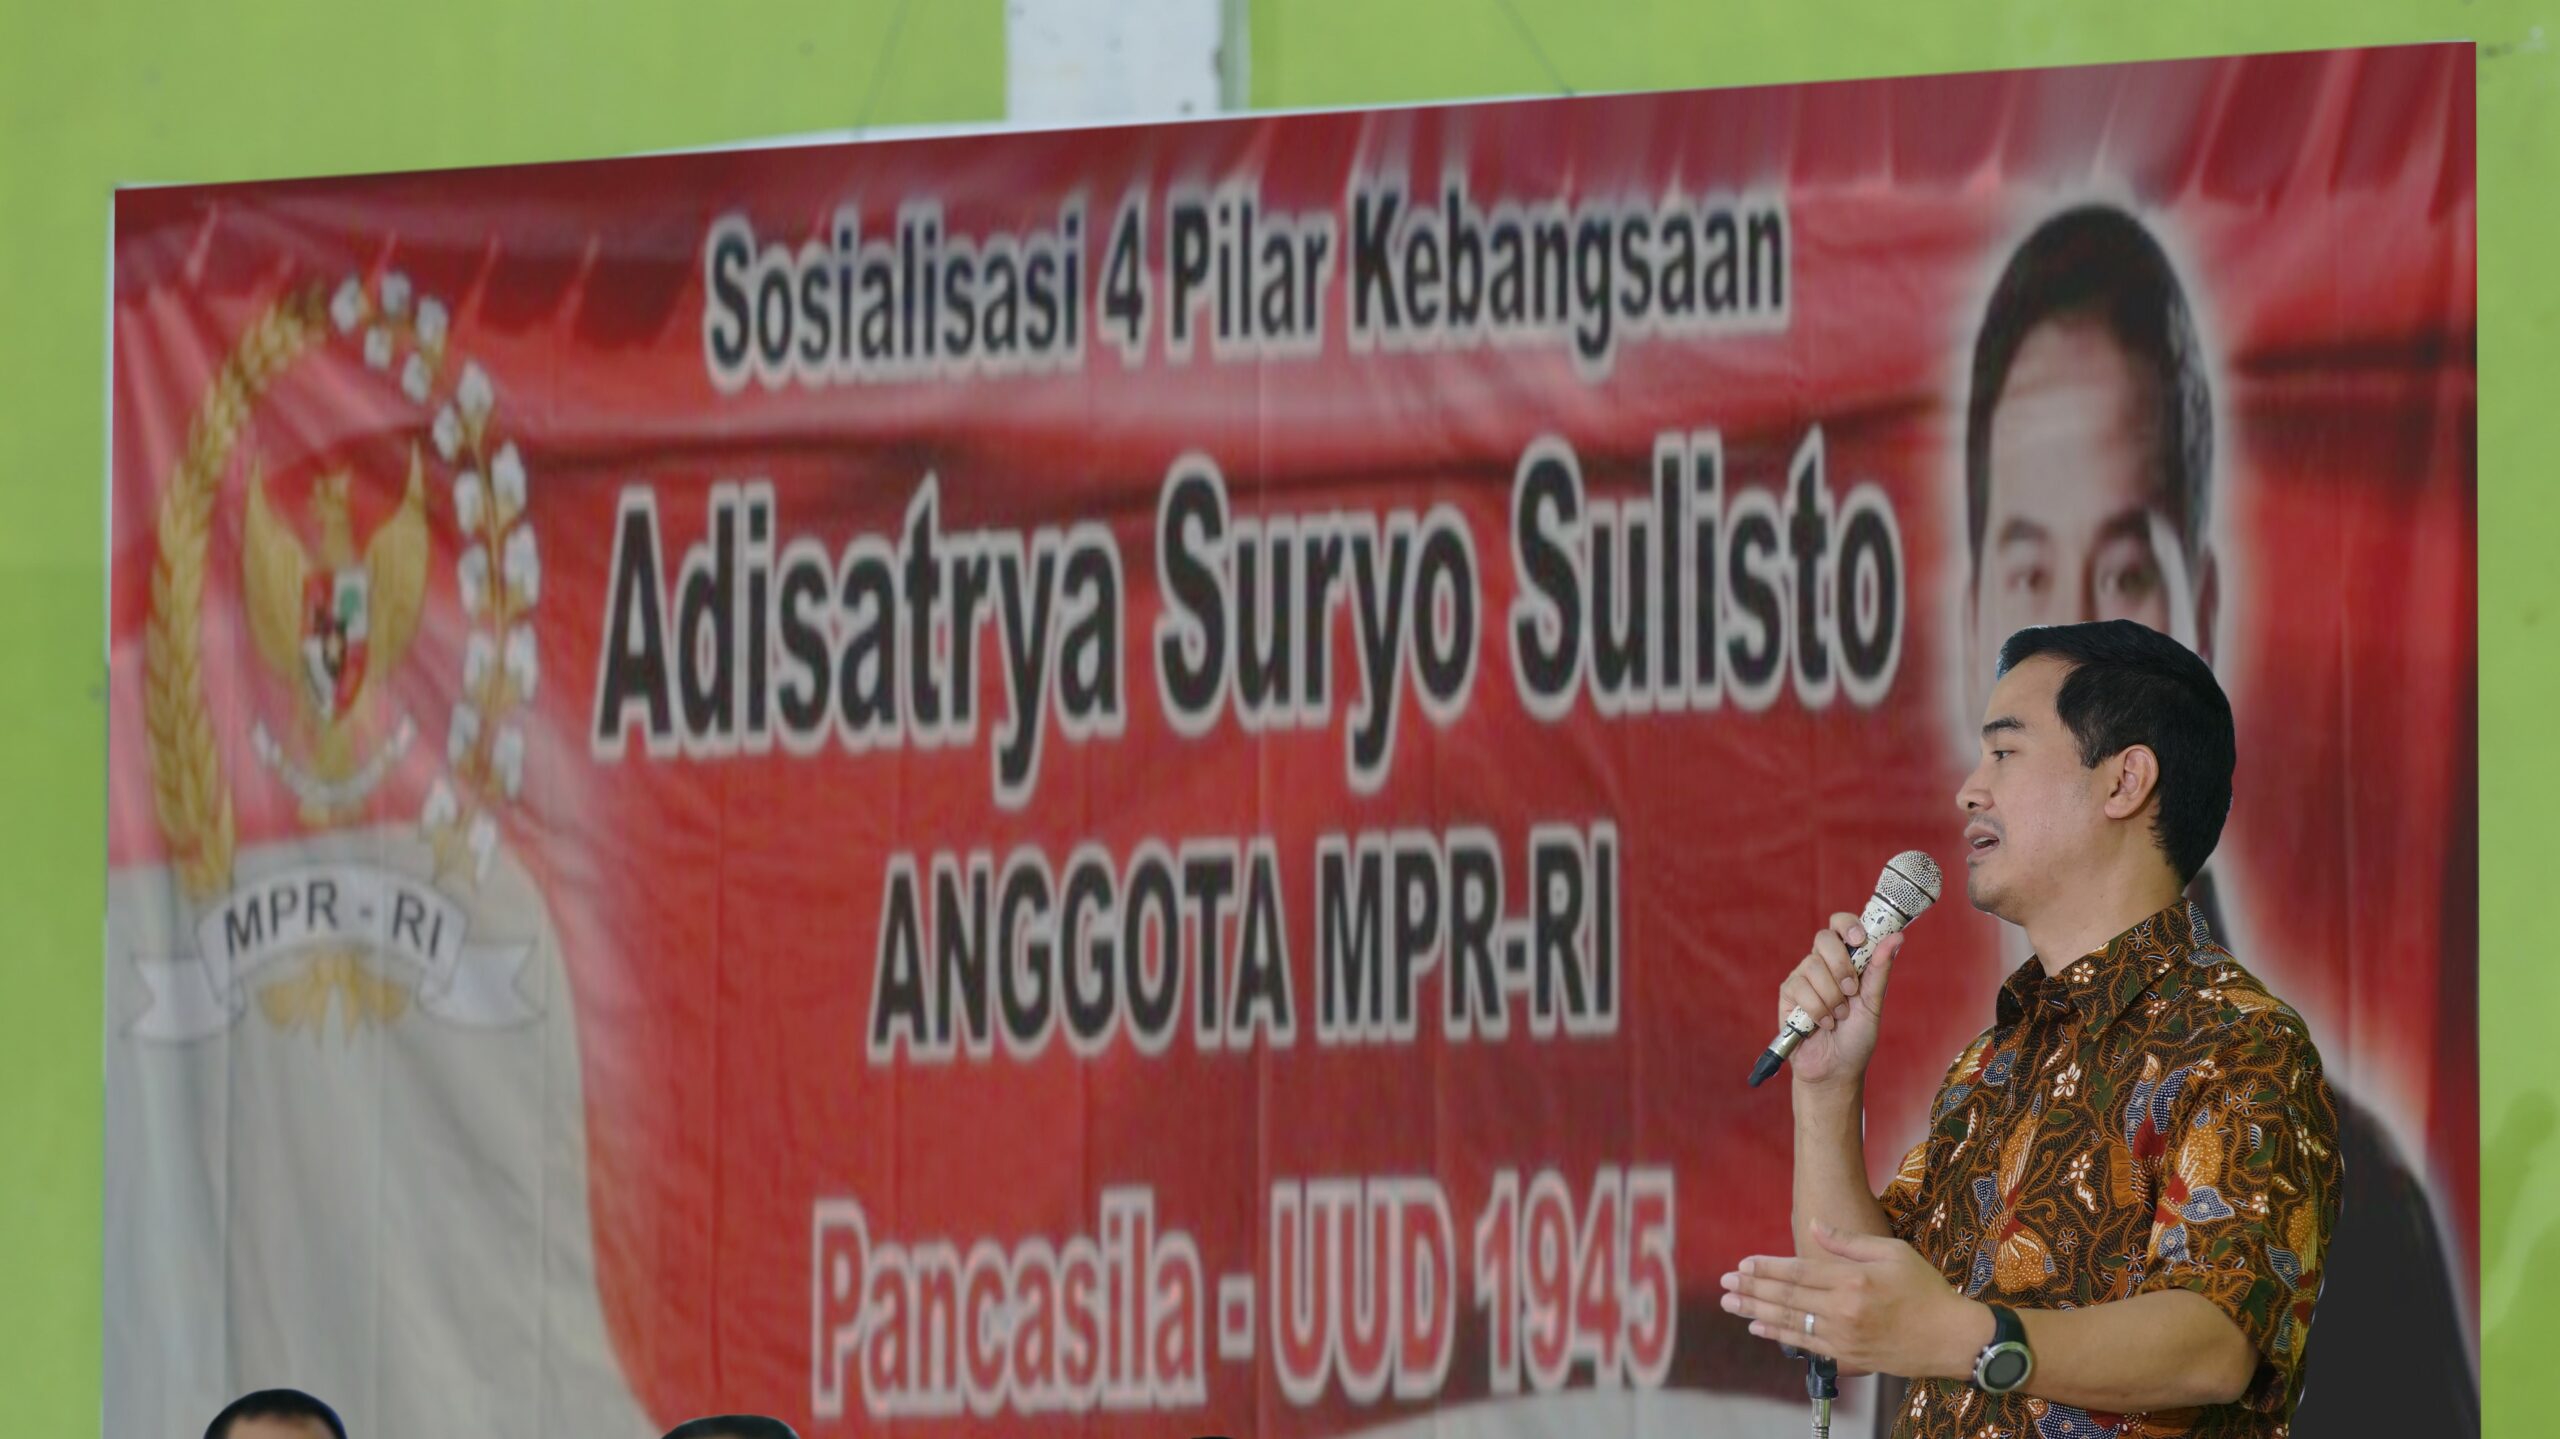 Adisatrya Suryo Sulisto Gelar Sosialisasi 4 Pilar Kebangsaan di Baturaden